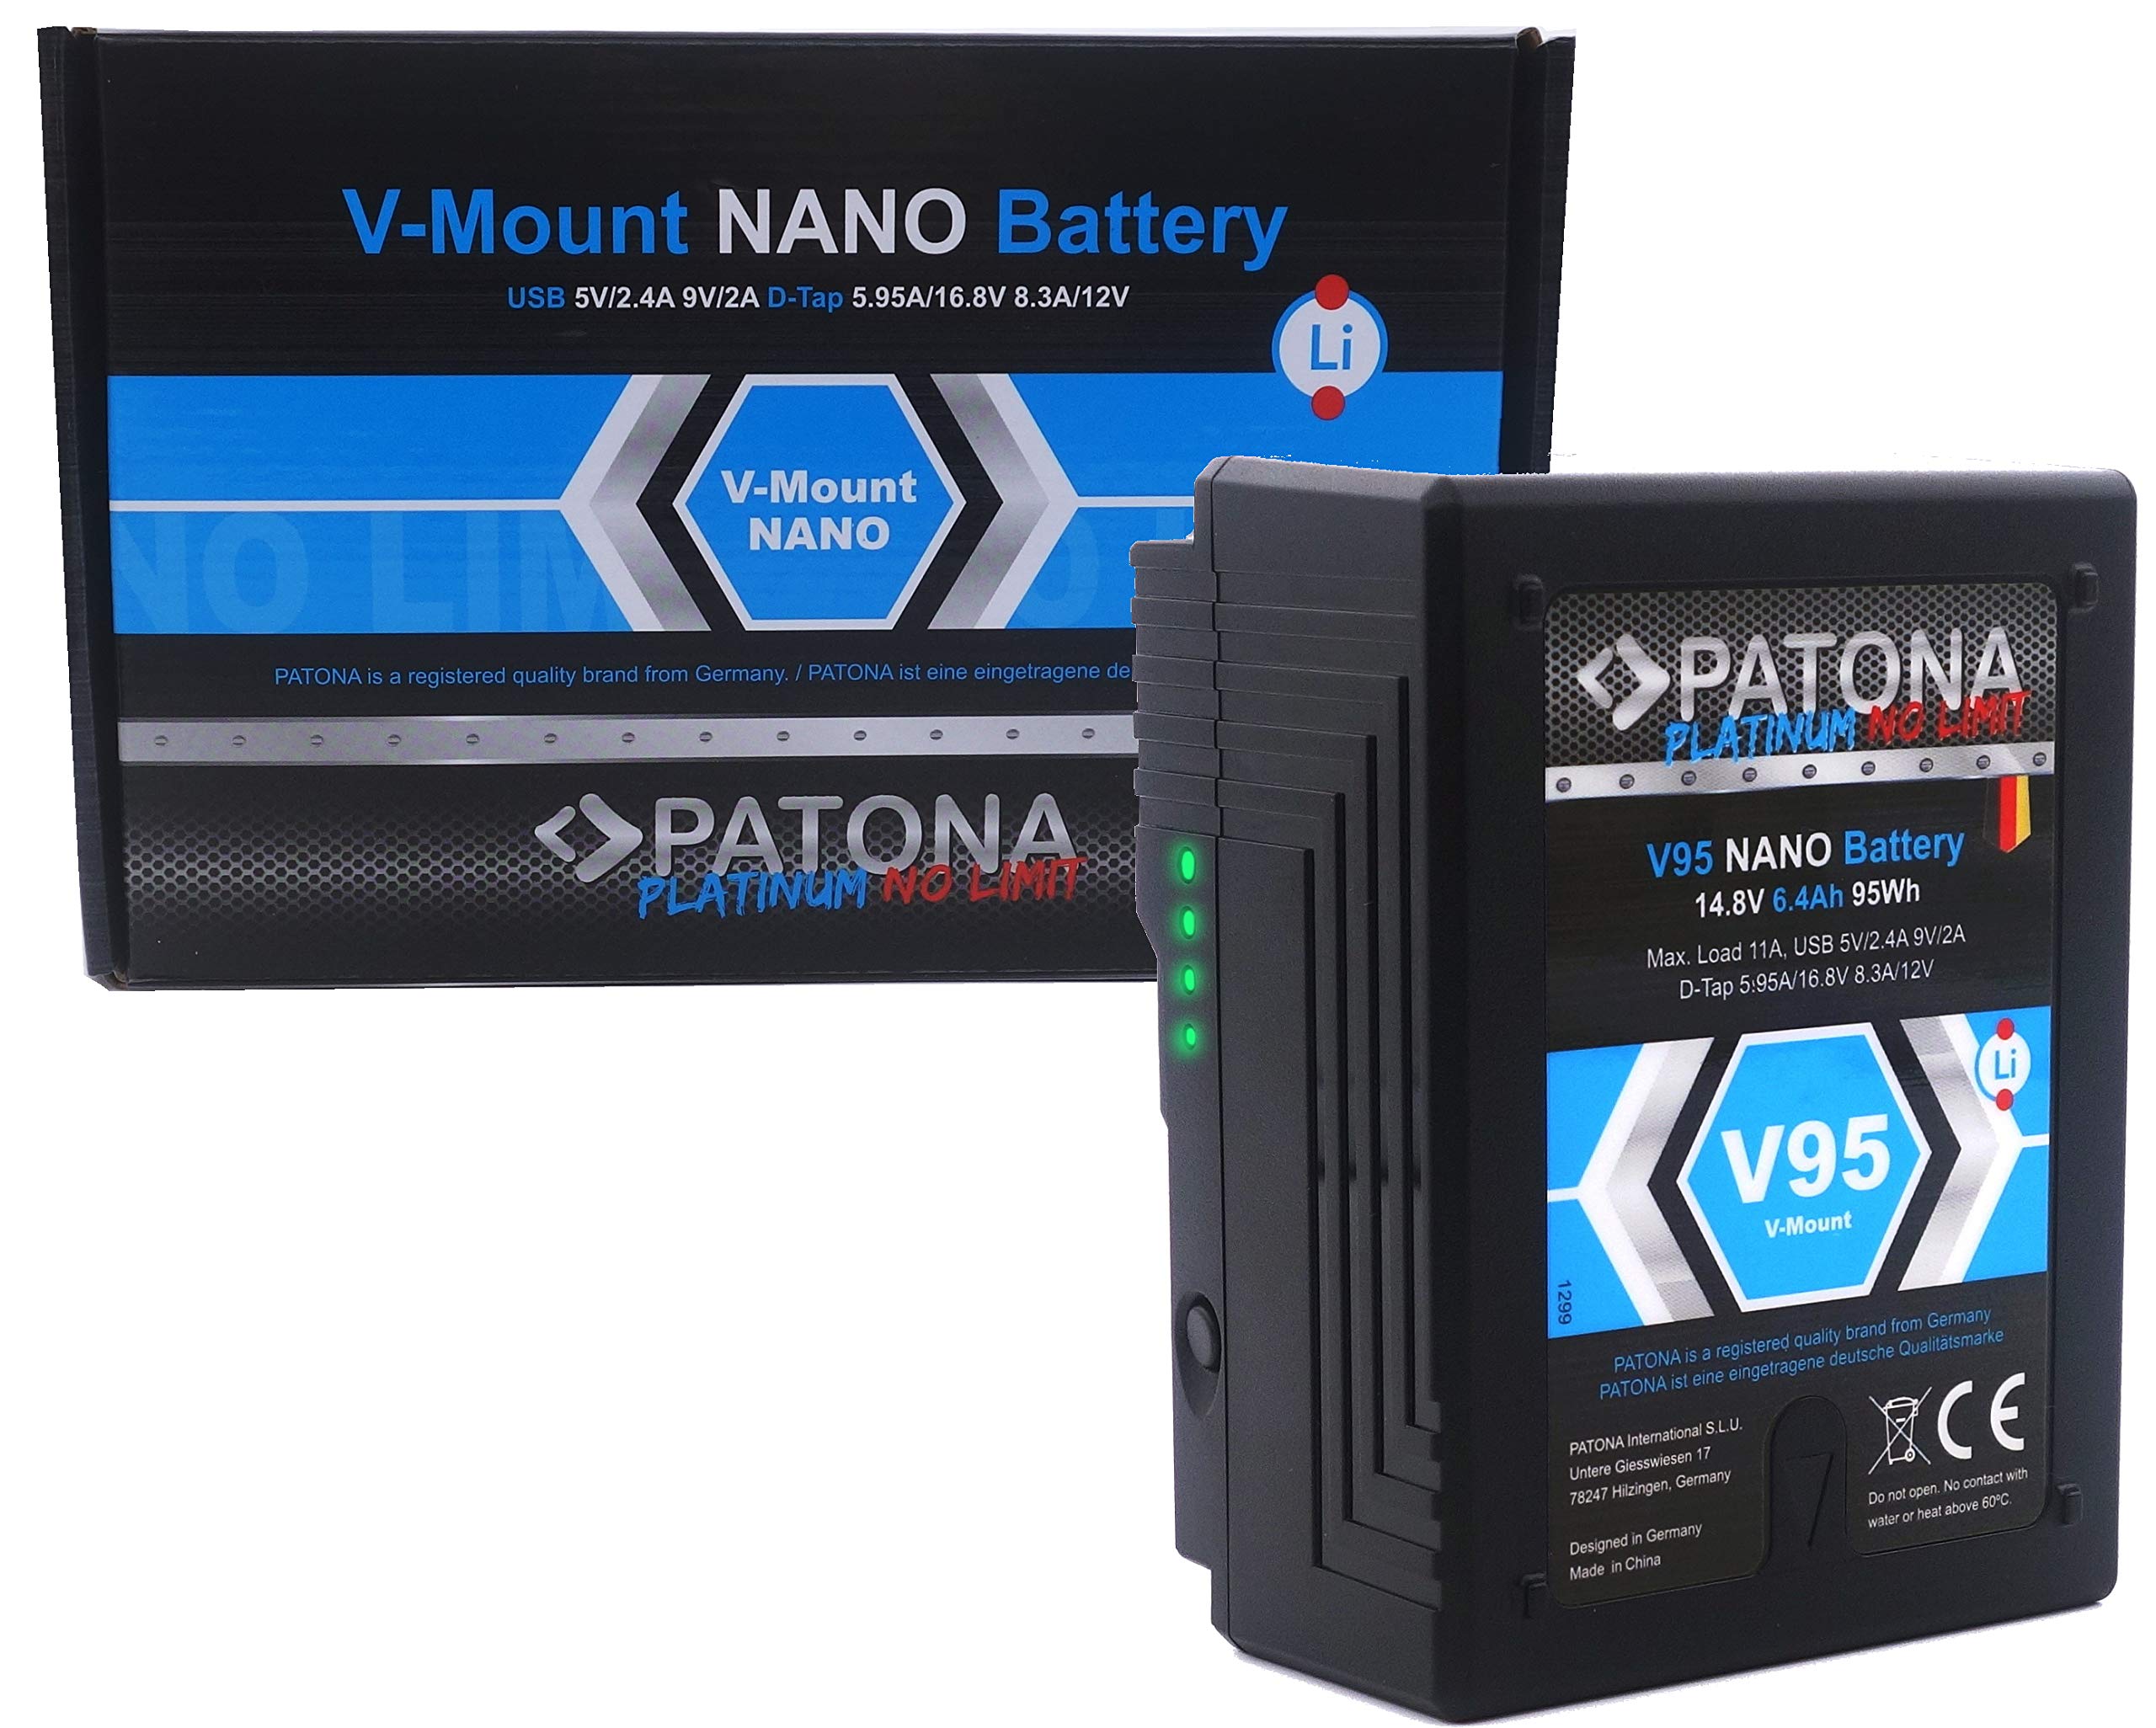 Patona Platinum V95 Nano V-Mount Akku D-Tap/Ersatz-Akku mit 95 Wh passend für Sony V-Mount Kameras